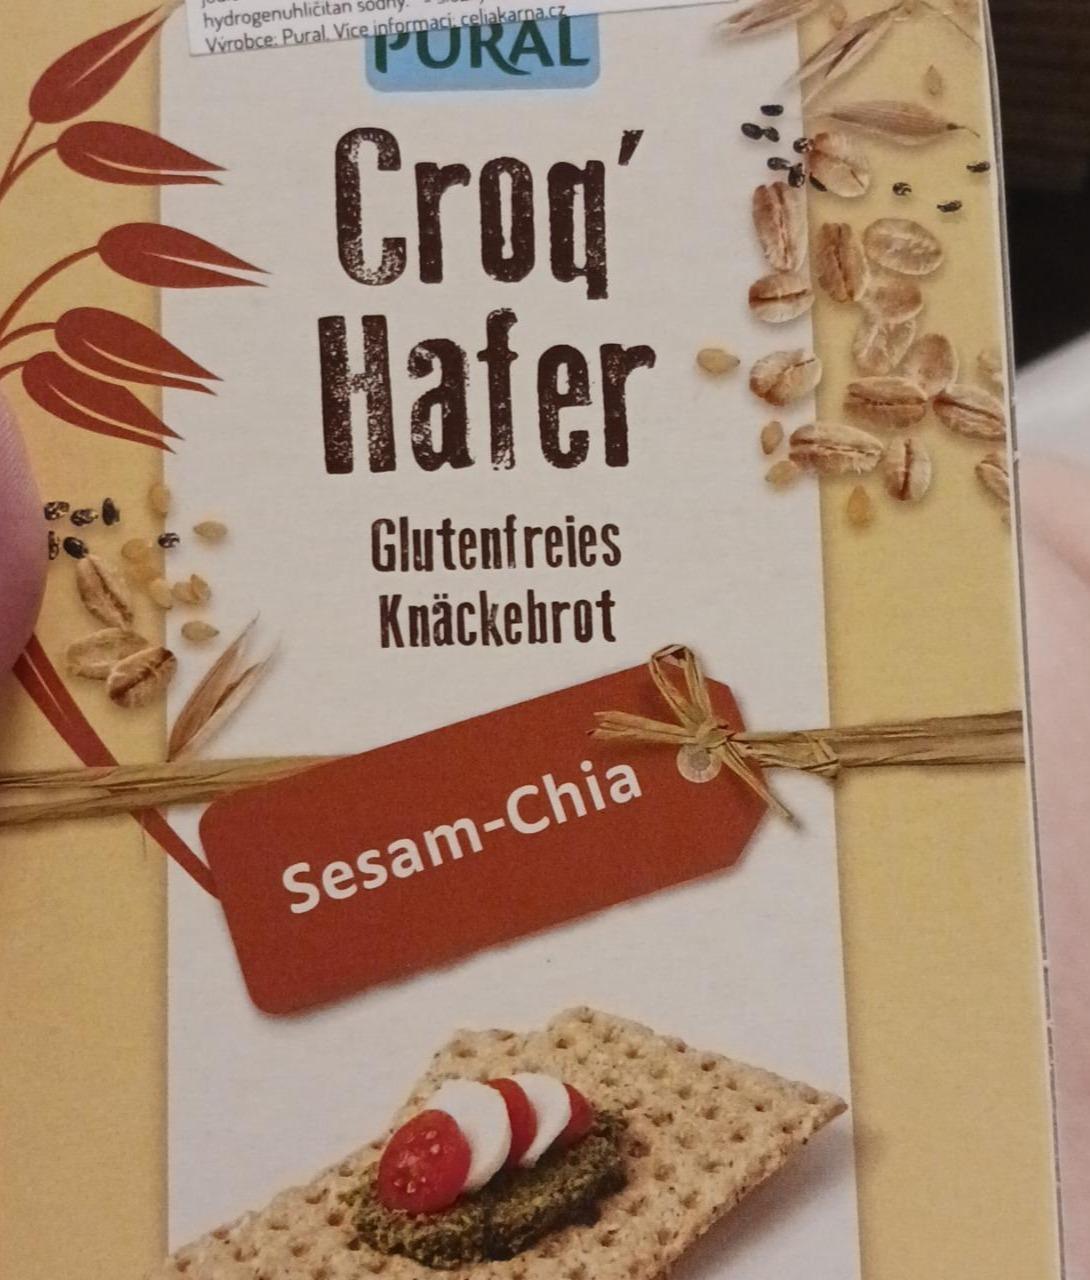 Fotografie - Croq' Hafer Sesam-Chia Glutenfreies Knäckebrot Pural